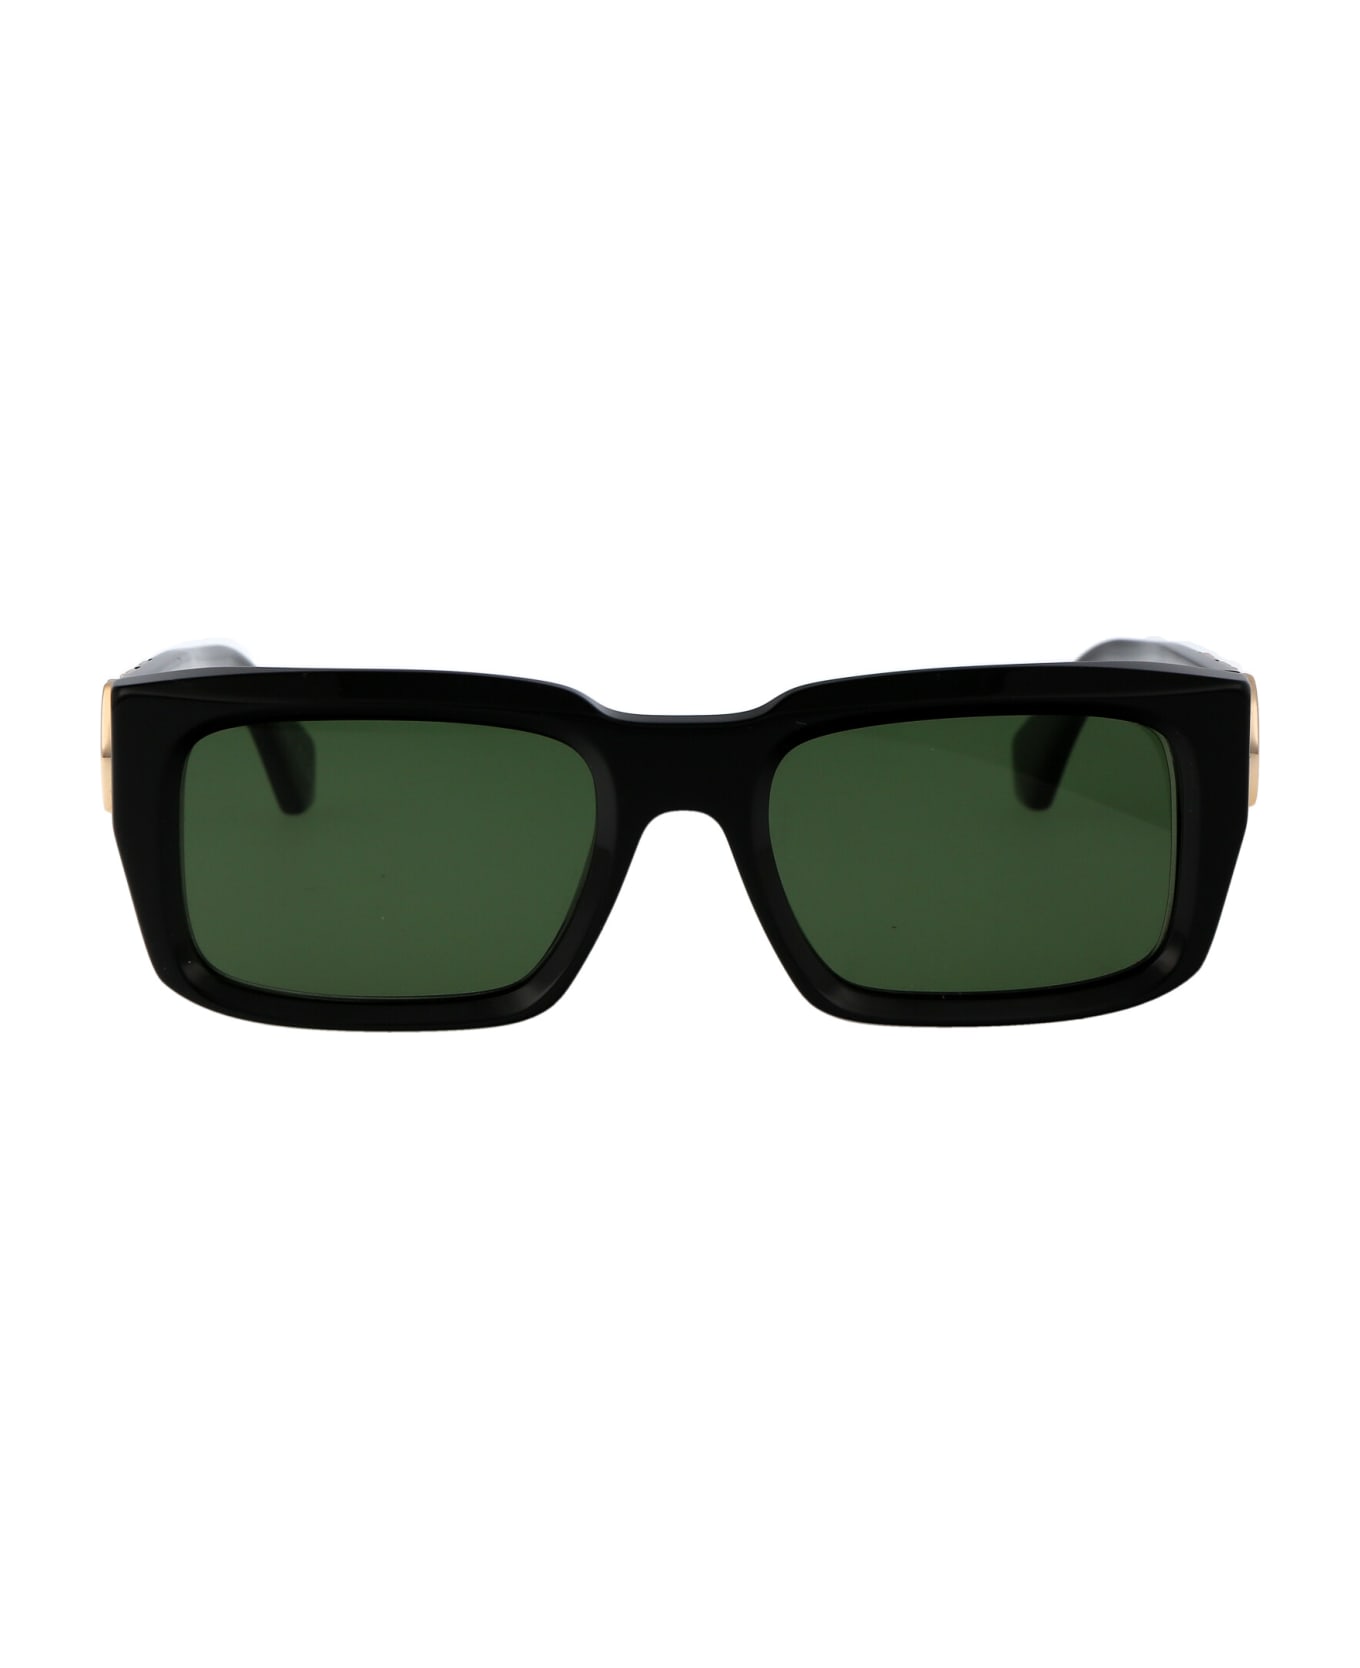 Off-White Hays Sunglasses - 1055 BLACK